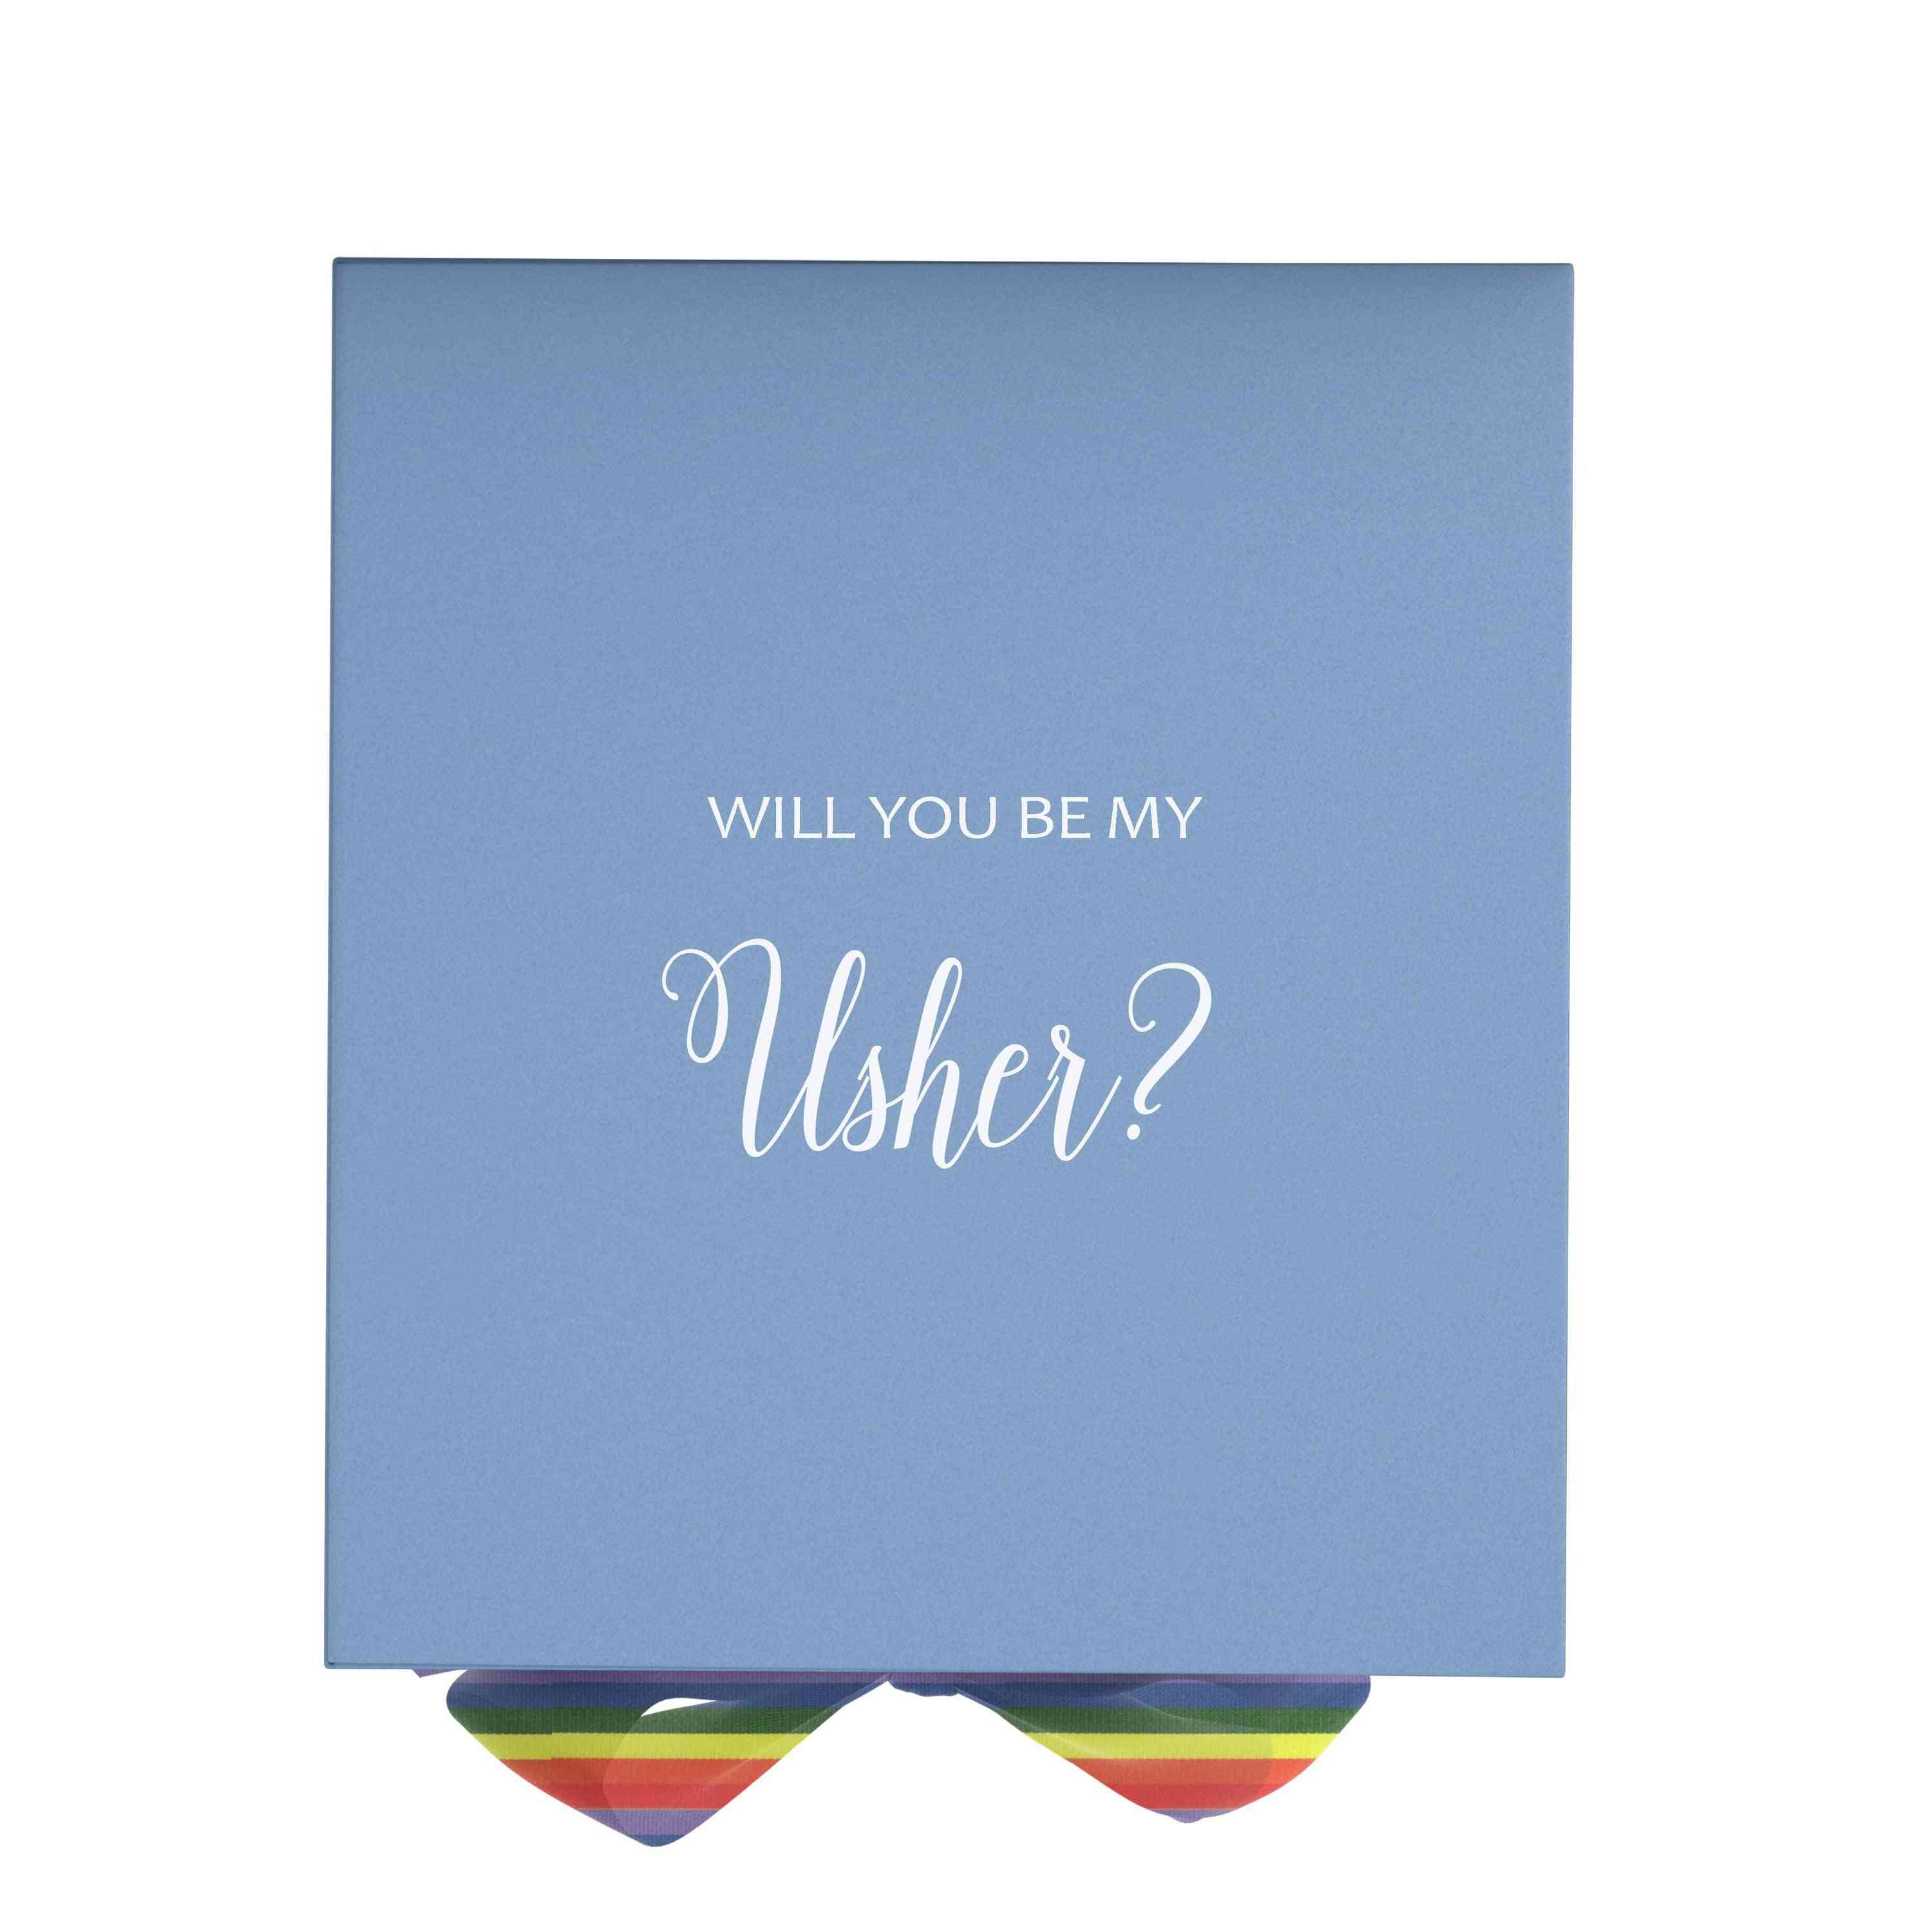 Will You Be My Usher? Proposal Box Light Blue - No Border - Rainbow